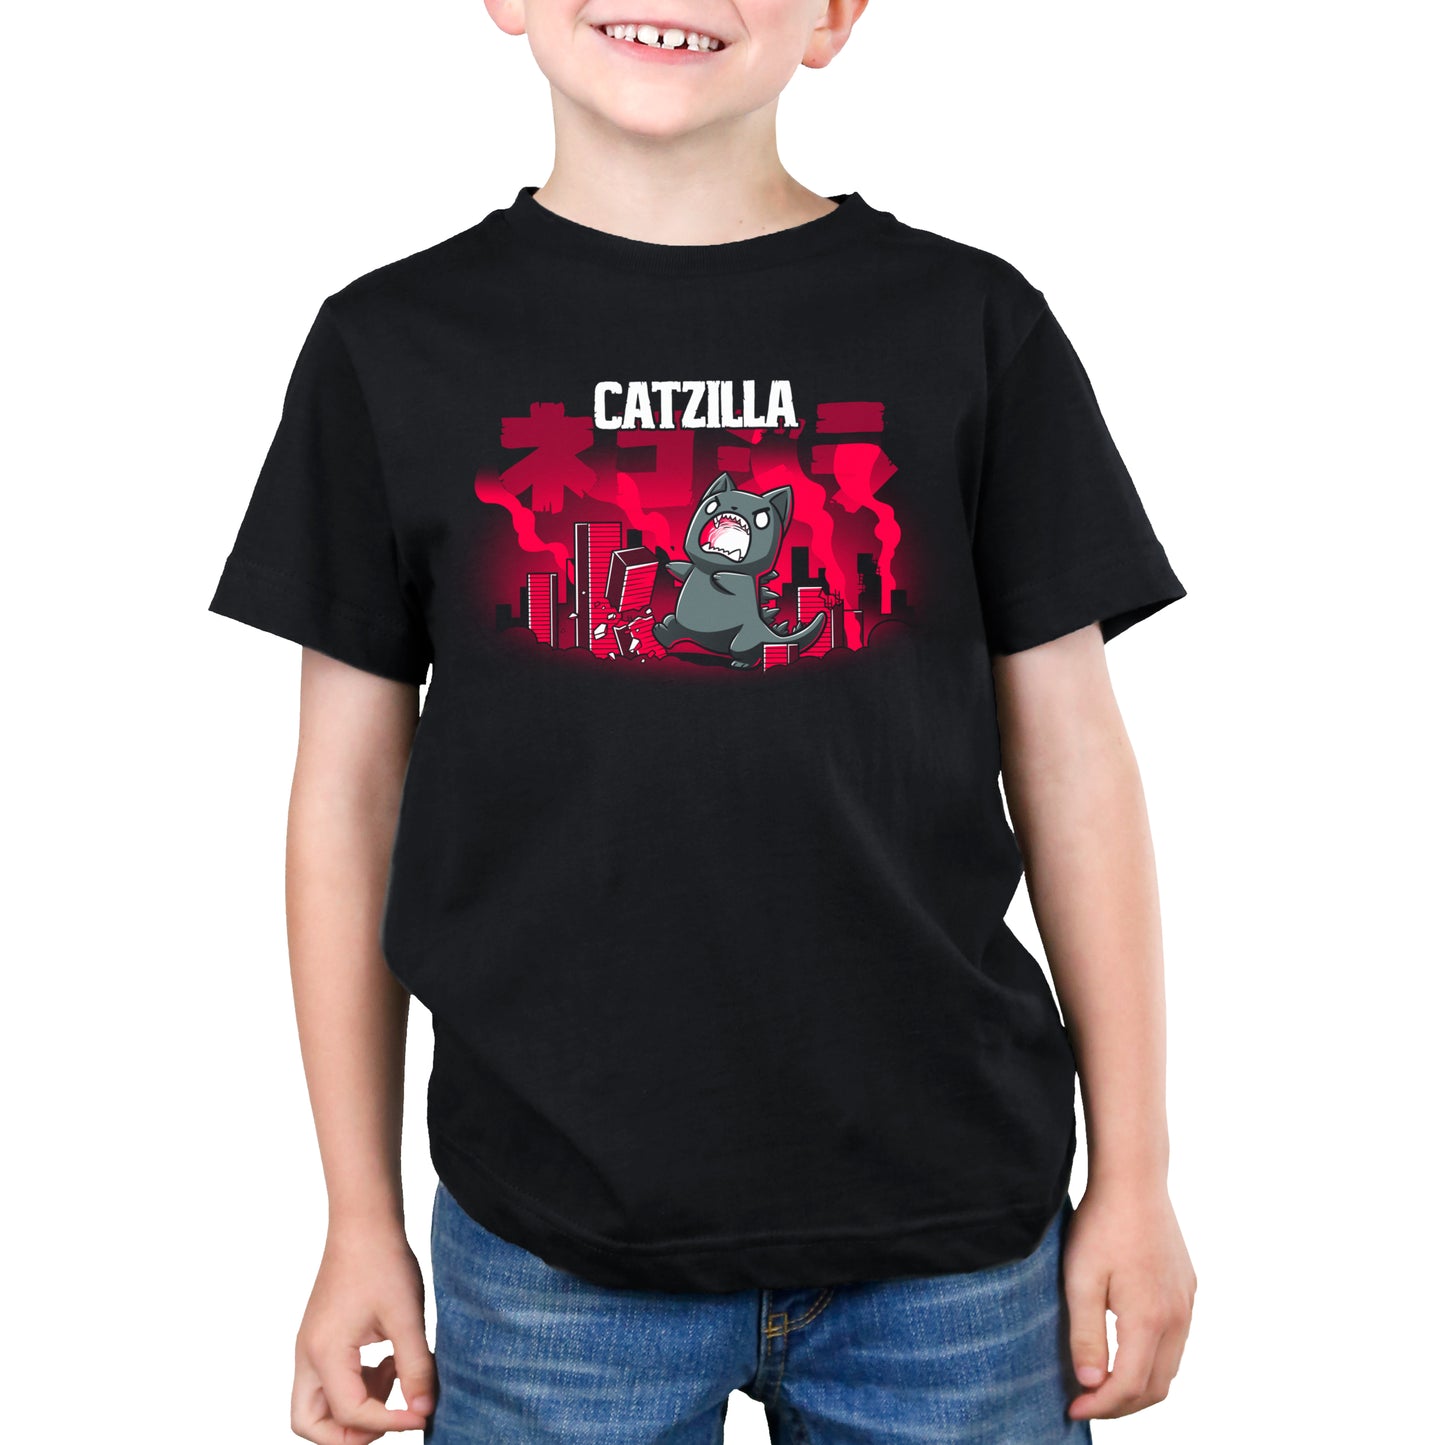 A young boy wearing an original TeeTurtle Catzilla t-shirt.